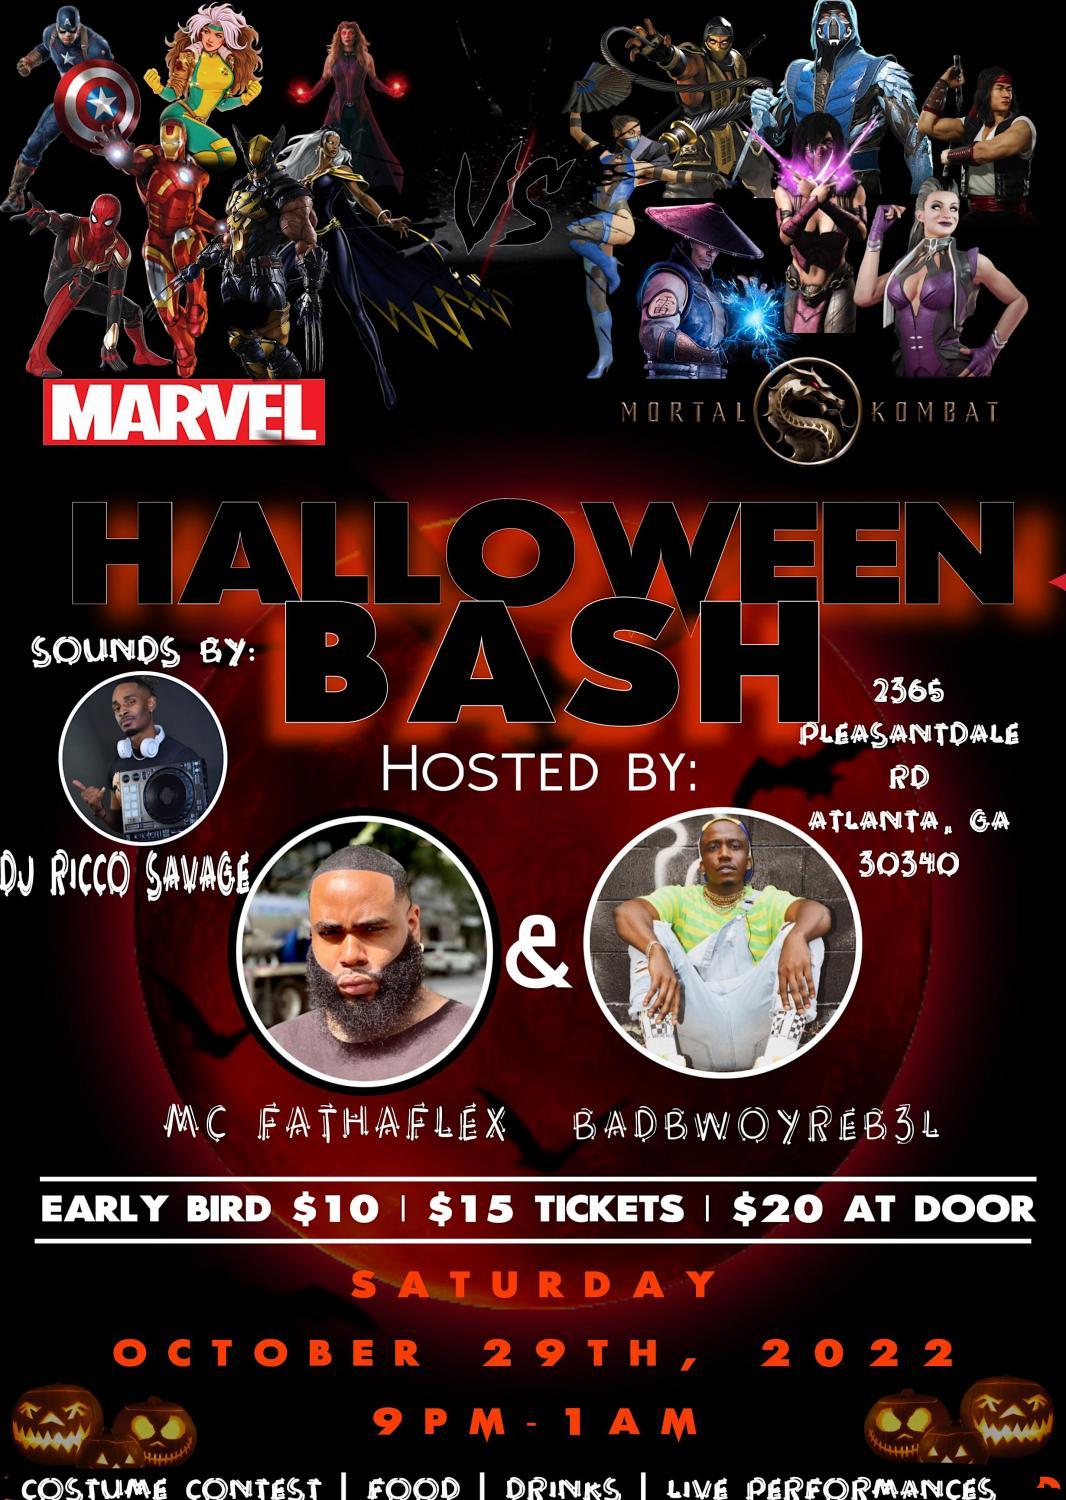 Marvel vs Mortal Kombat Halloween Bash
Sat Oct 29, 8:30 PM - Sun Oct 30, 12:00 AM
in 11 days